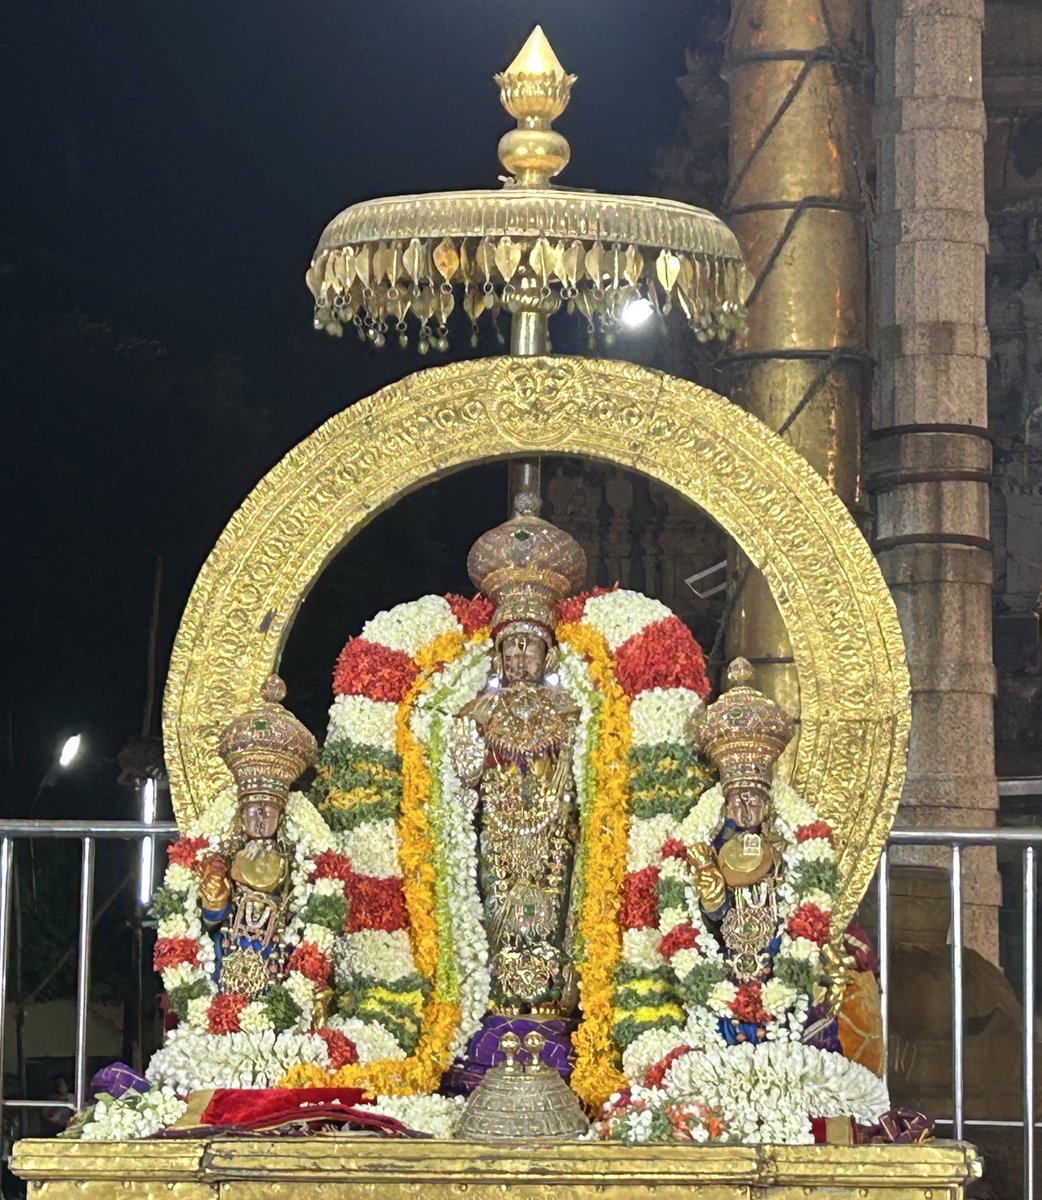 RHRN
Yugadi purappadu for Varadhan